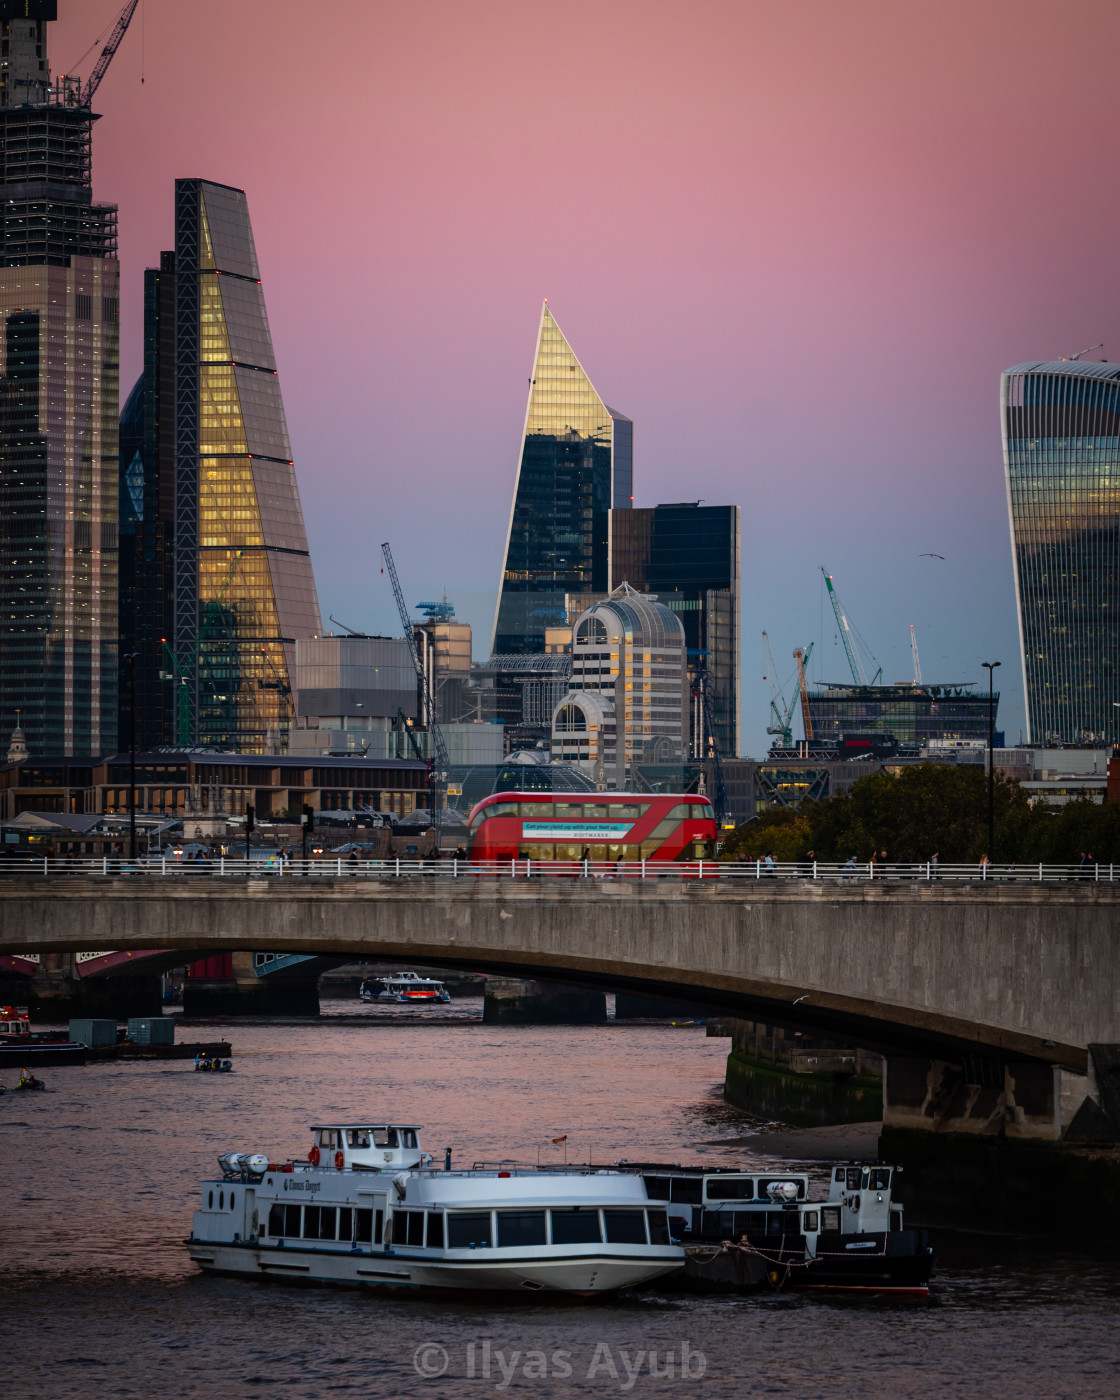 "London skyline" stock image